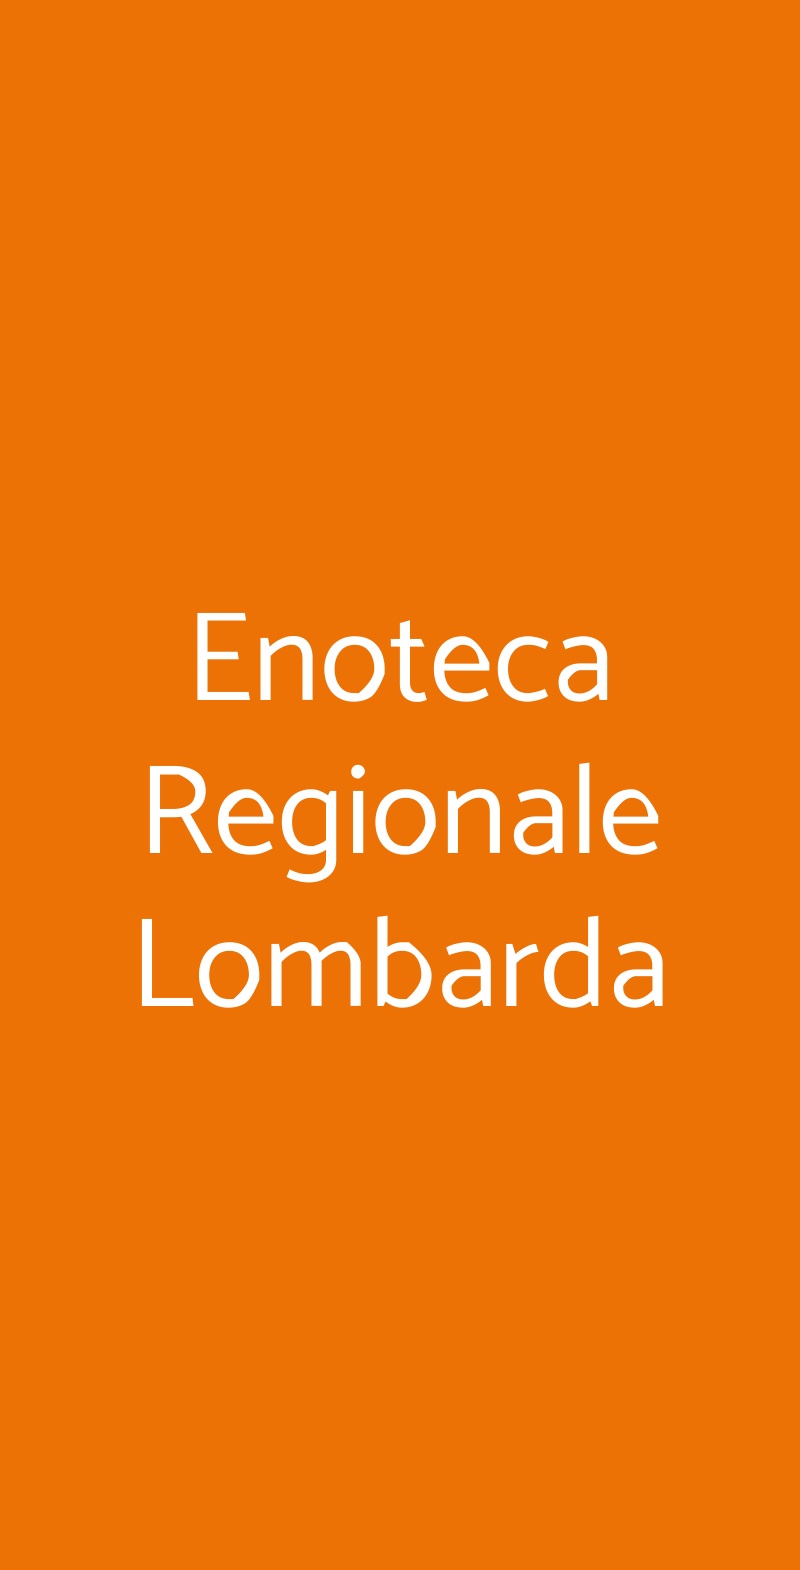 Enoteca Regionale Lombarda Milano menù 1 pagina